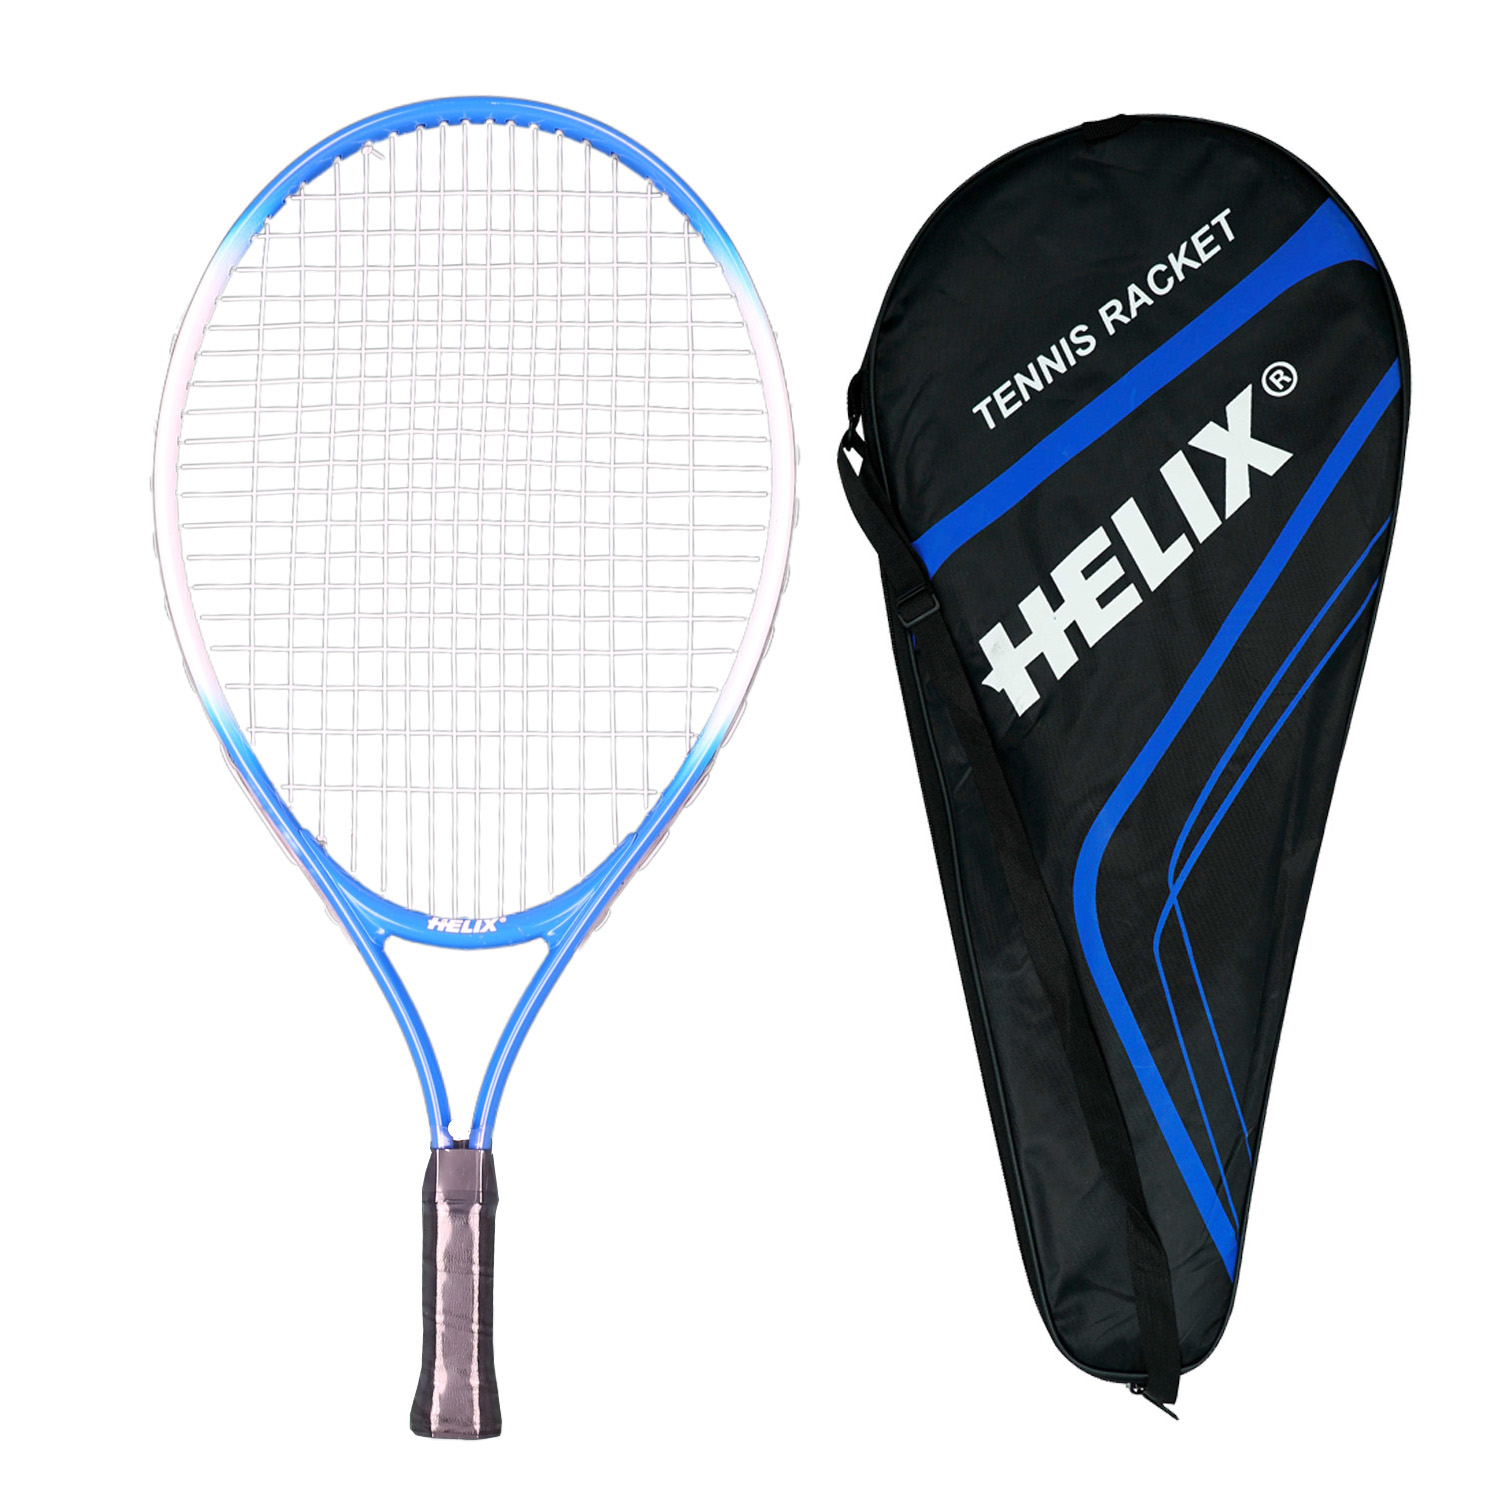 Helix Tenis Raketi 21"